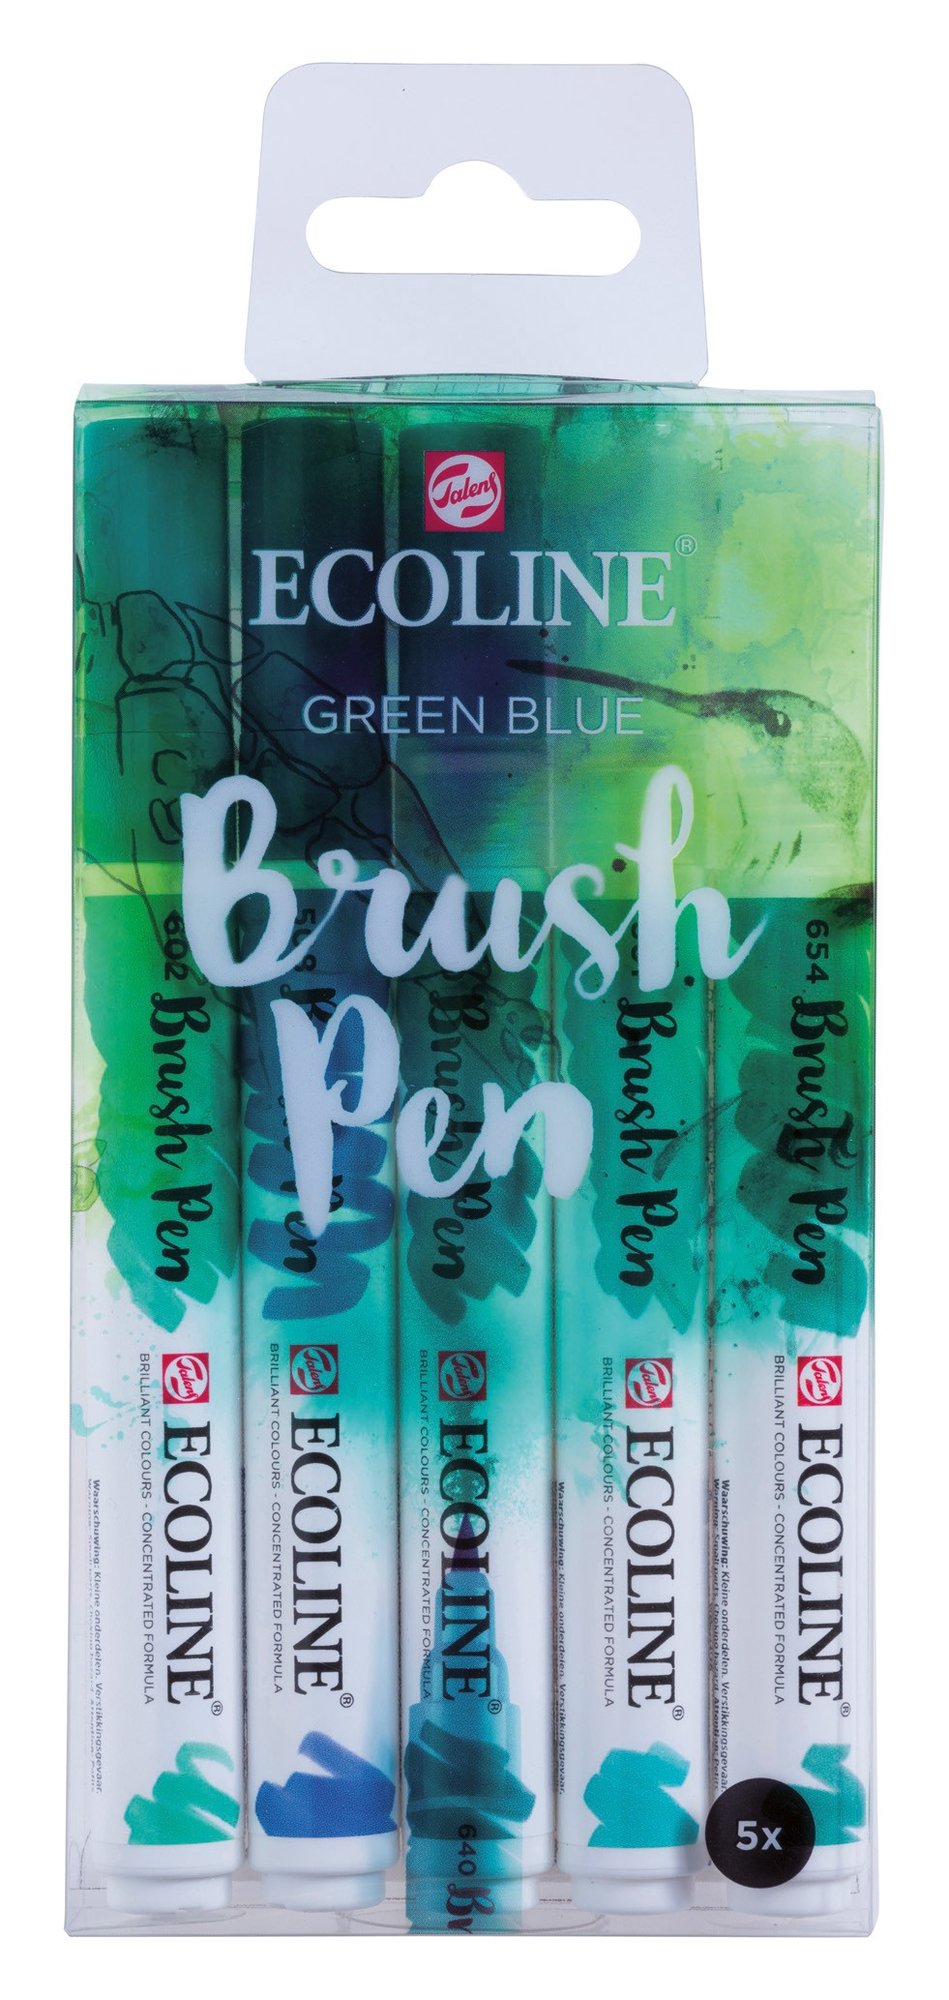 Talens Ecoline Brush pen set 5 - Green Blue